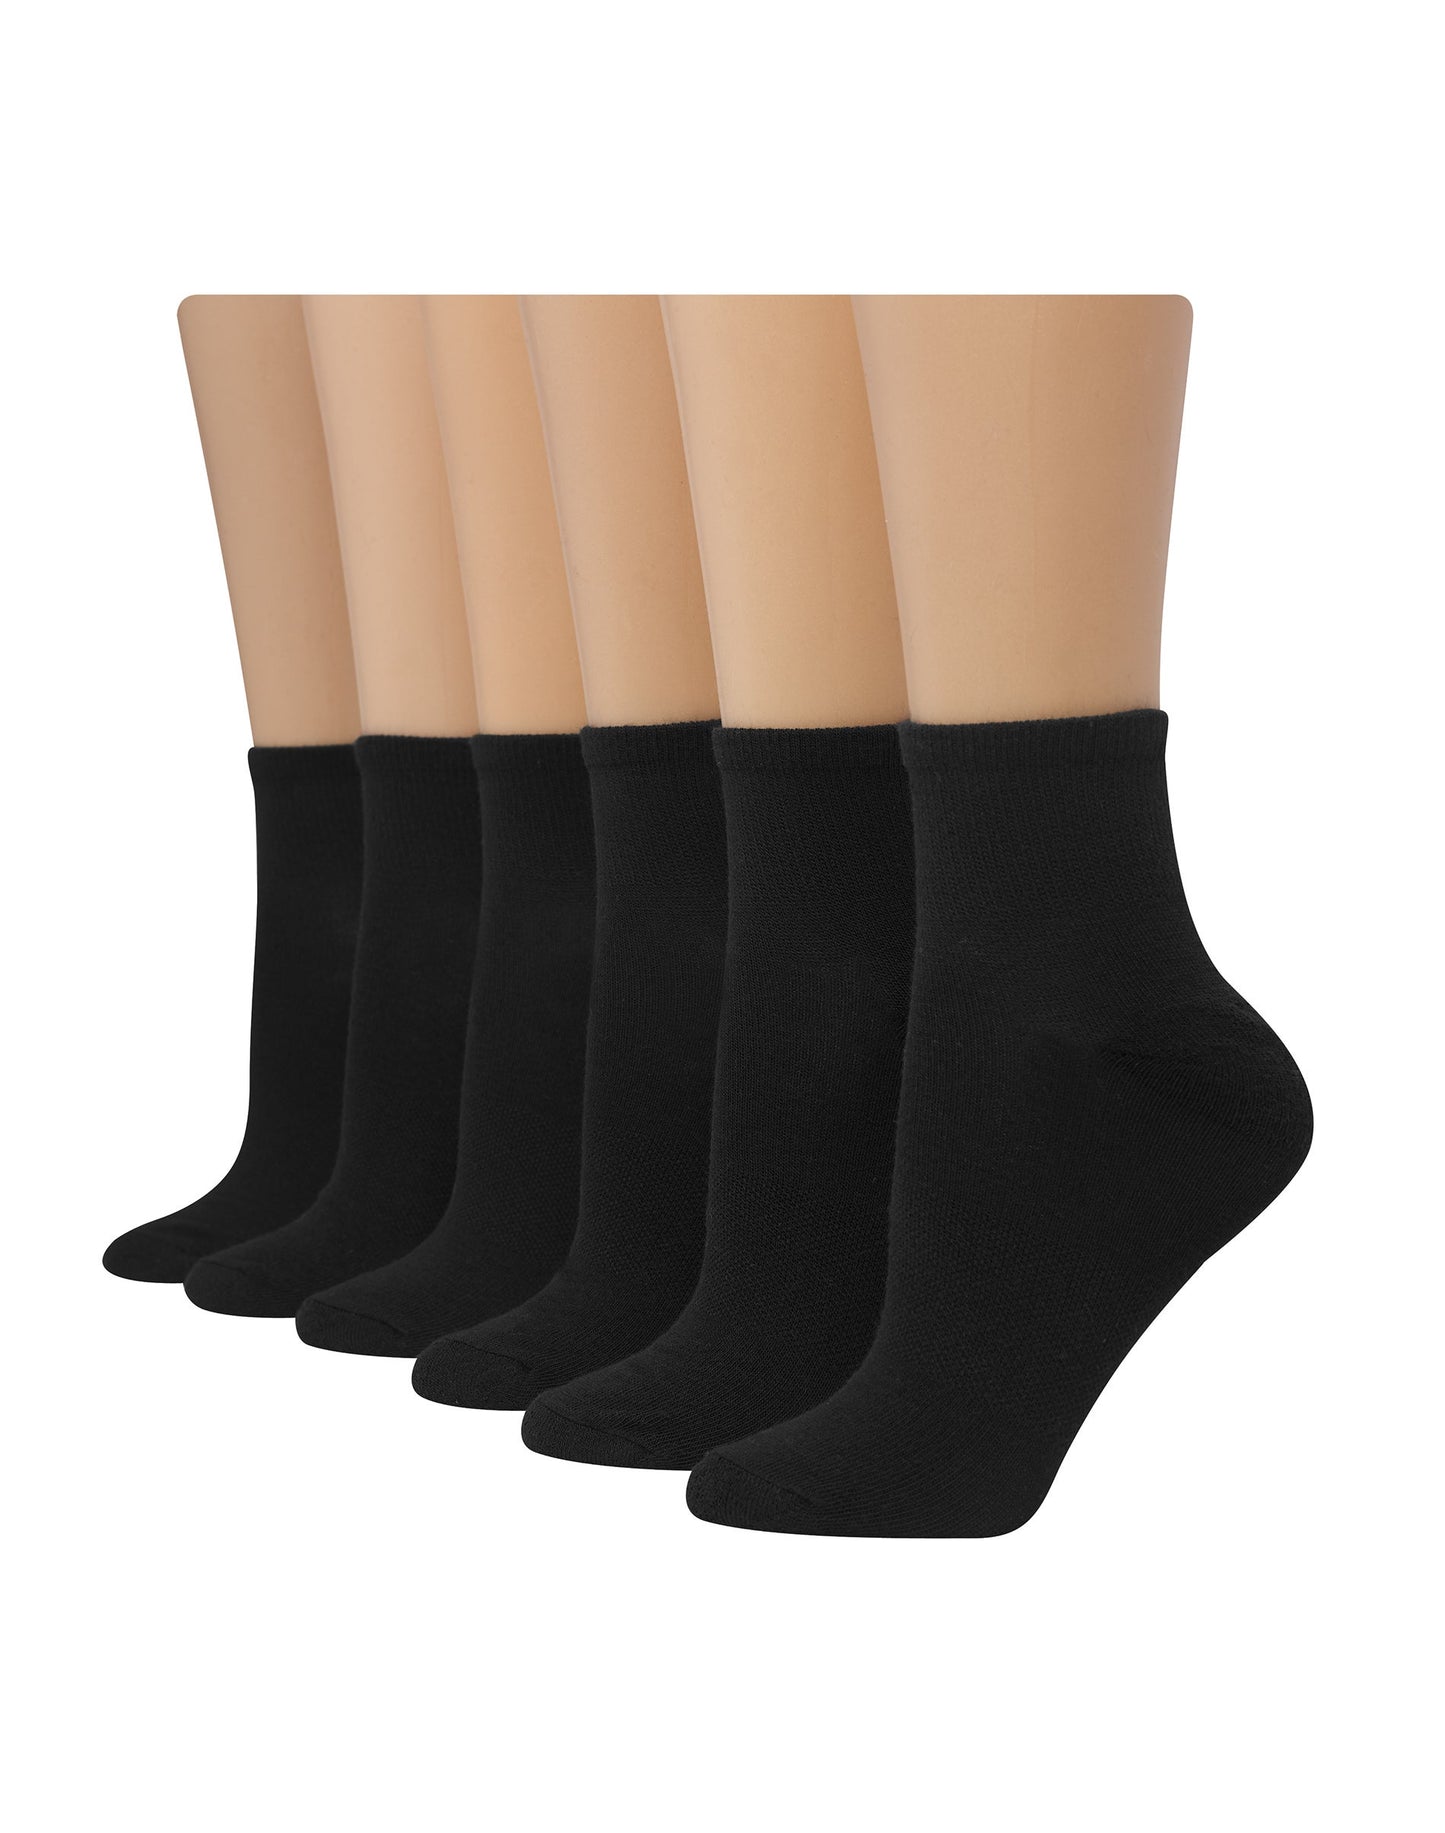 Hanes Women's Comfort Fit Ankle Socks, 6-Pack Black/Pink 5-9